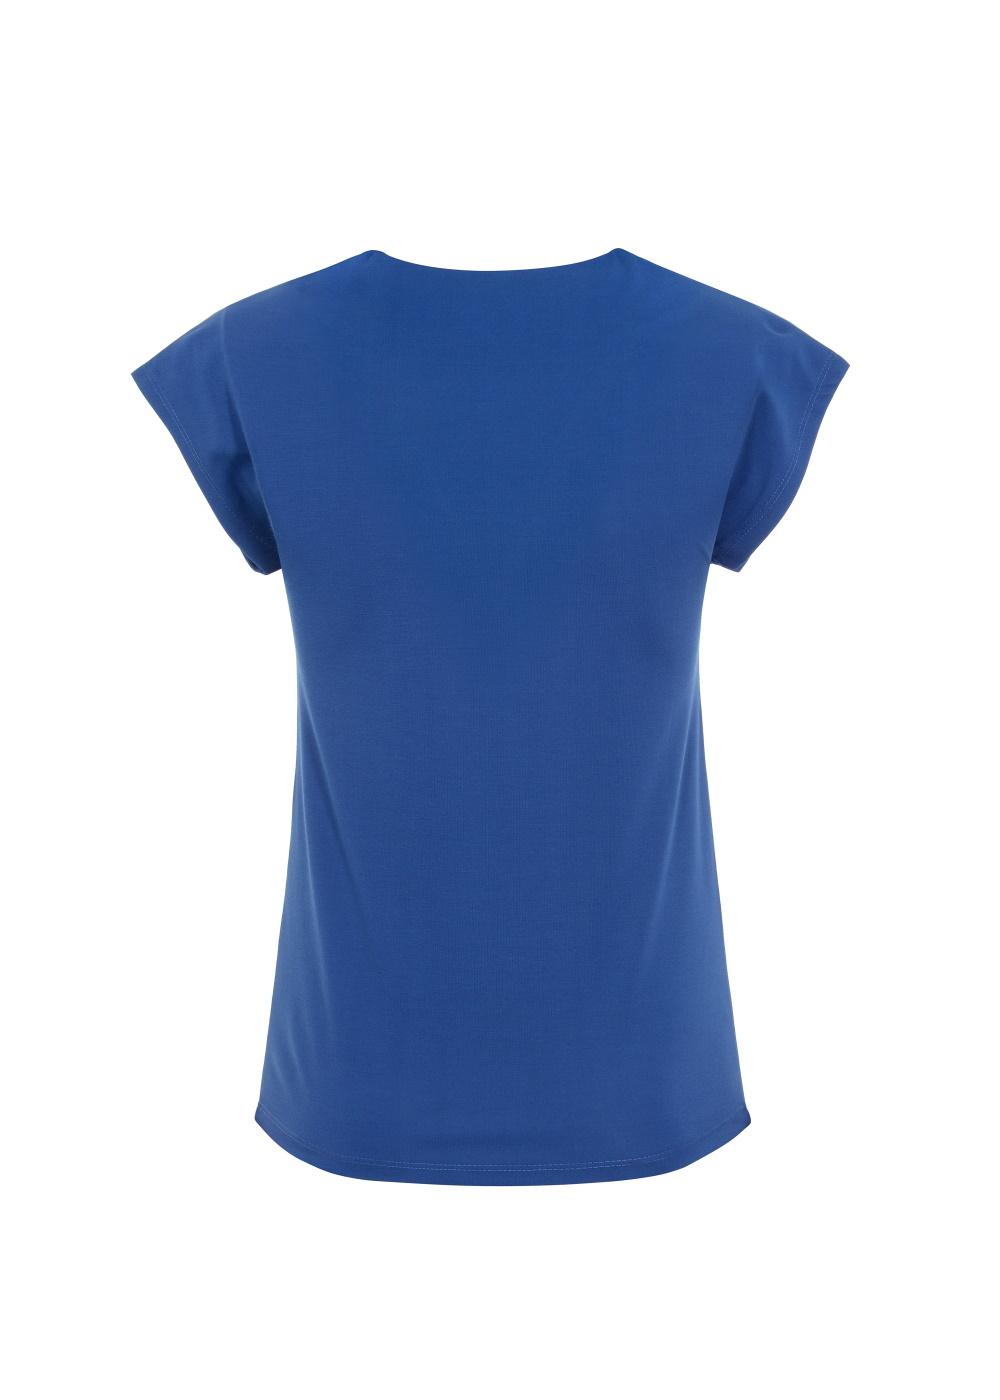 Niebieska bluzka basic damska BLUDT-0075-61(W20)